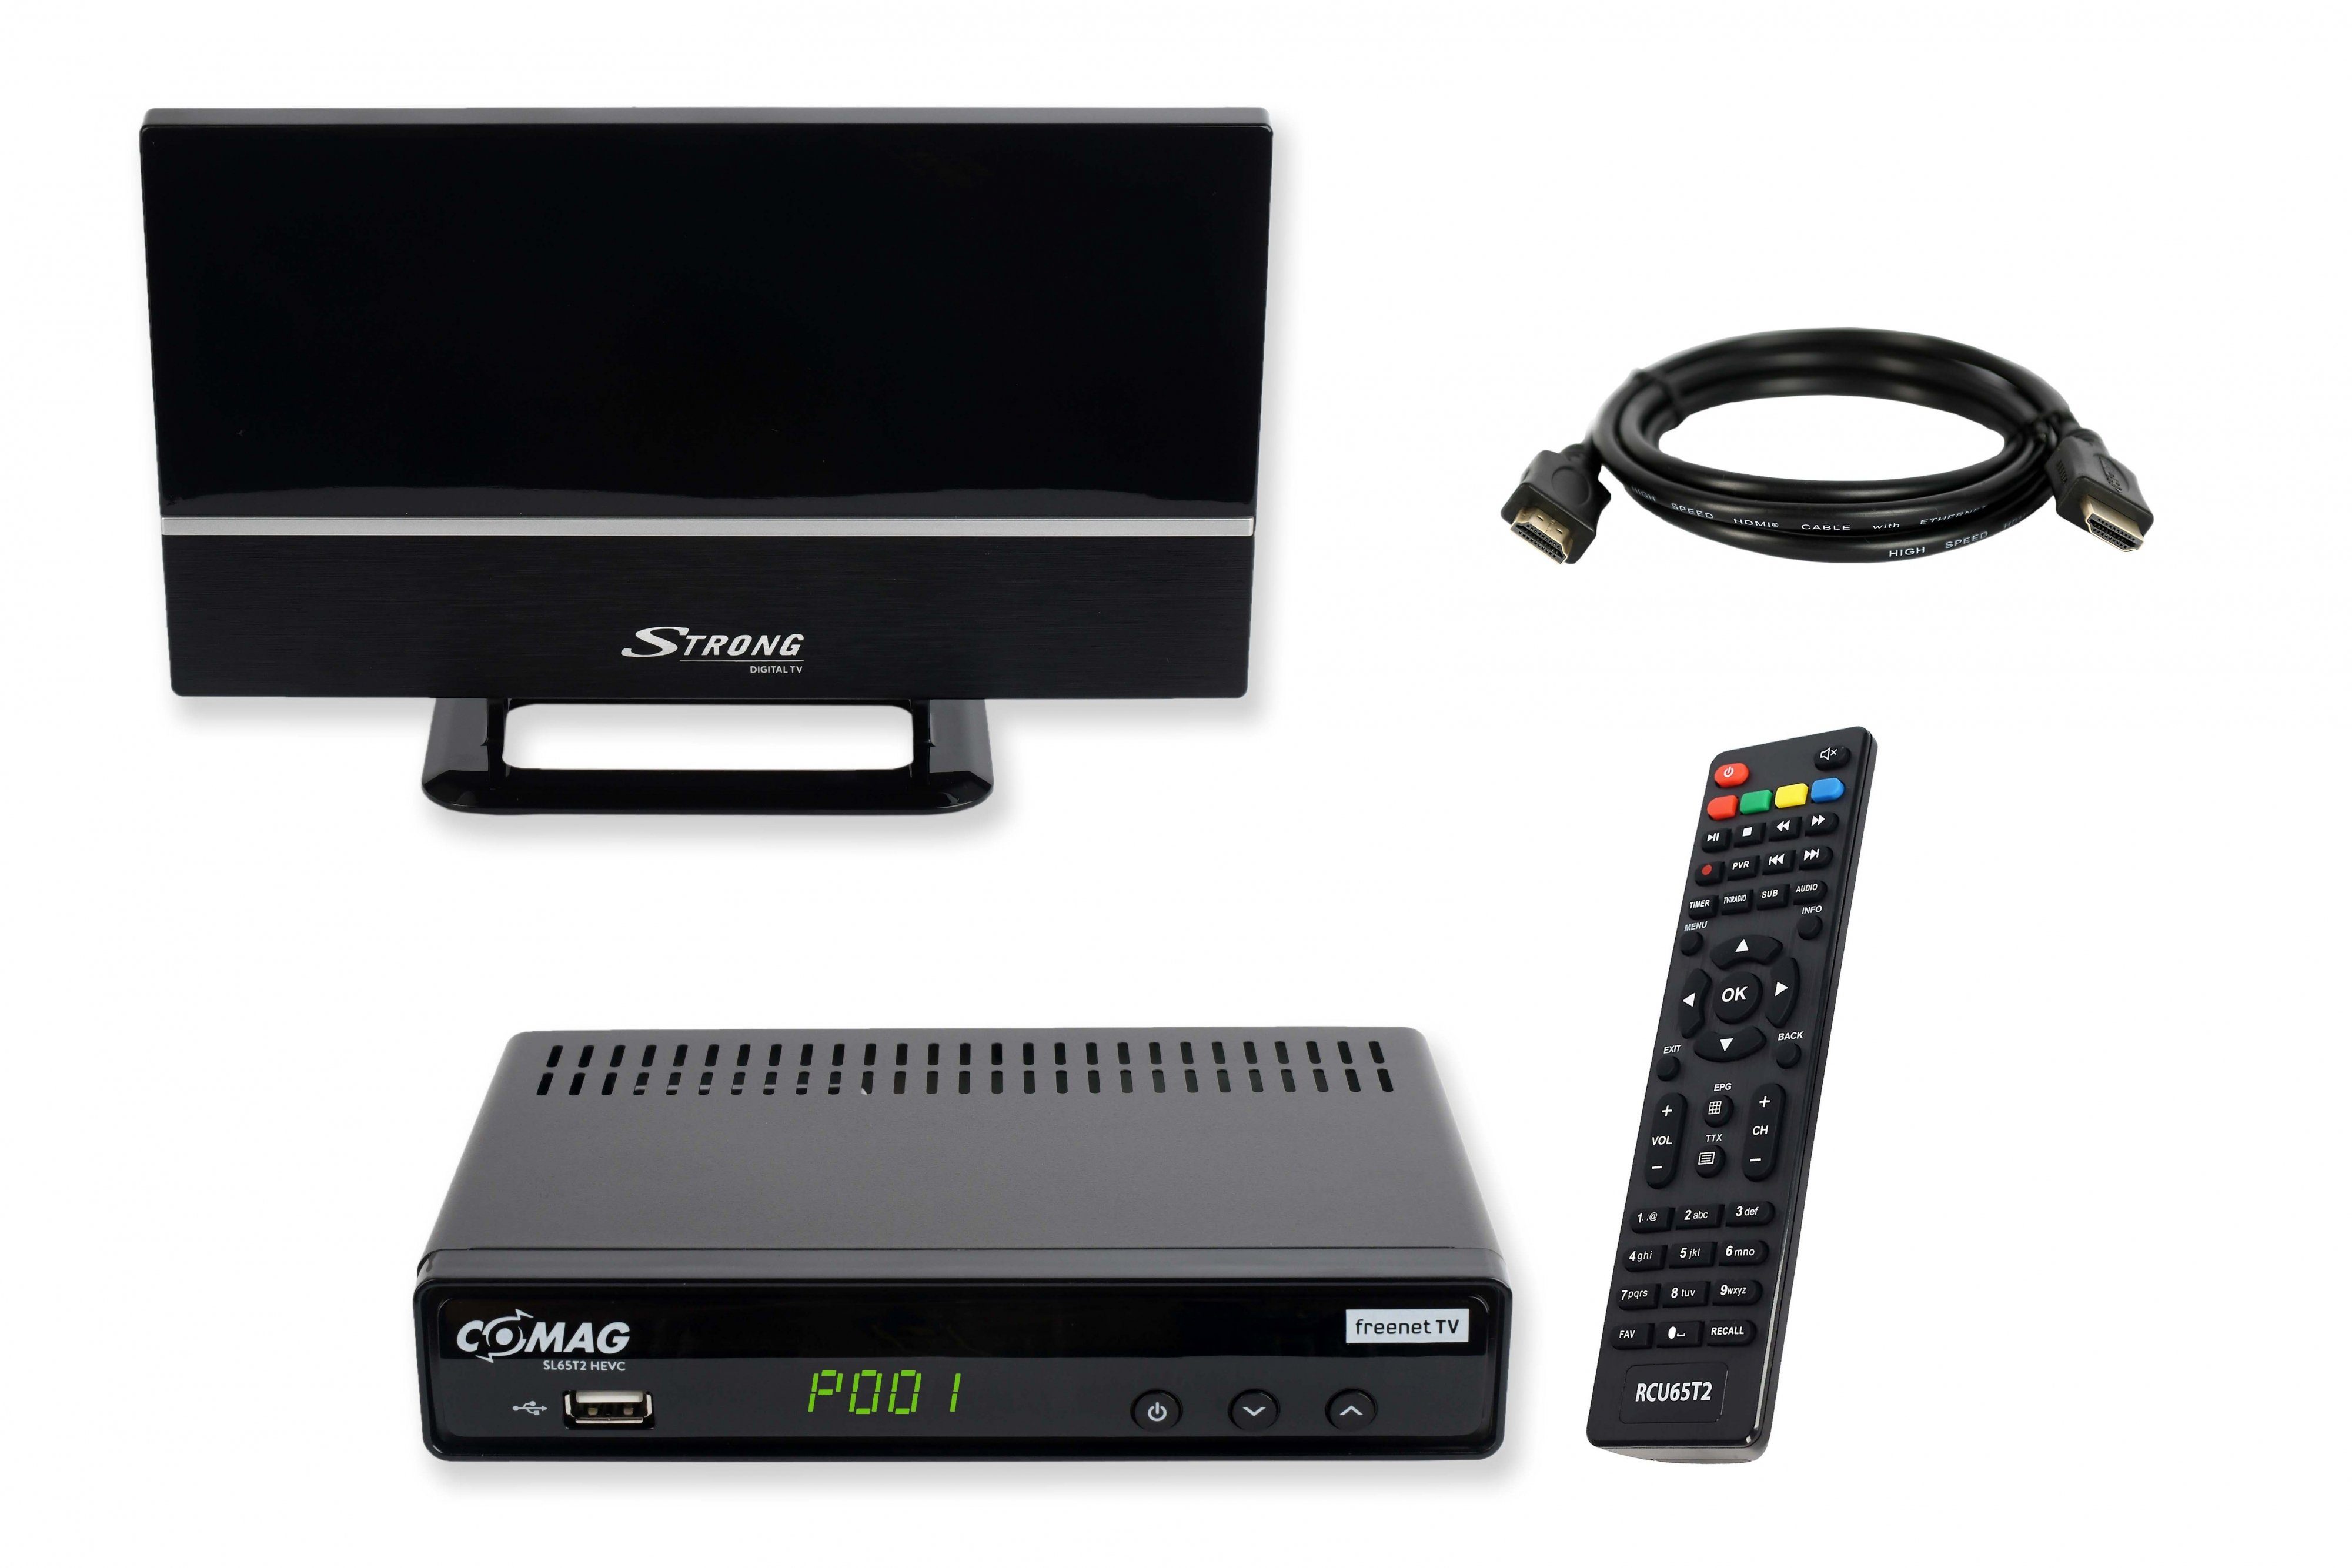 Comag Antenne) DVB-T2 passive Kabel, SL65T2 HDMI Full DVB-T2 HD HD TV, Receiver freenet (2m